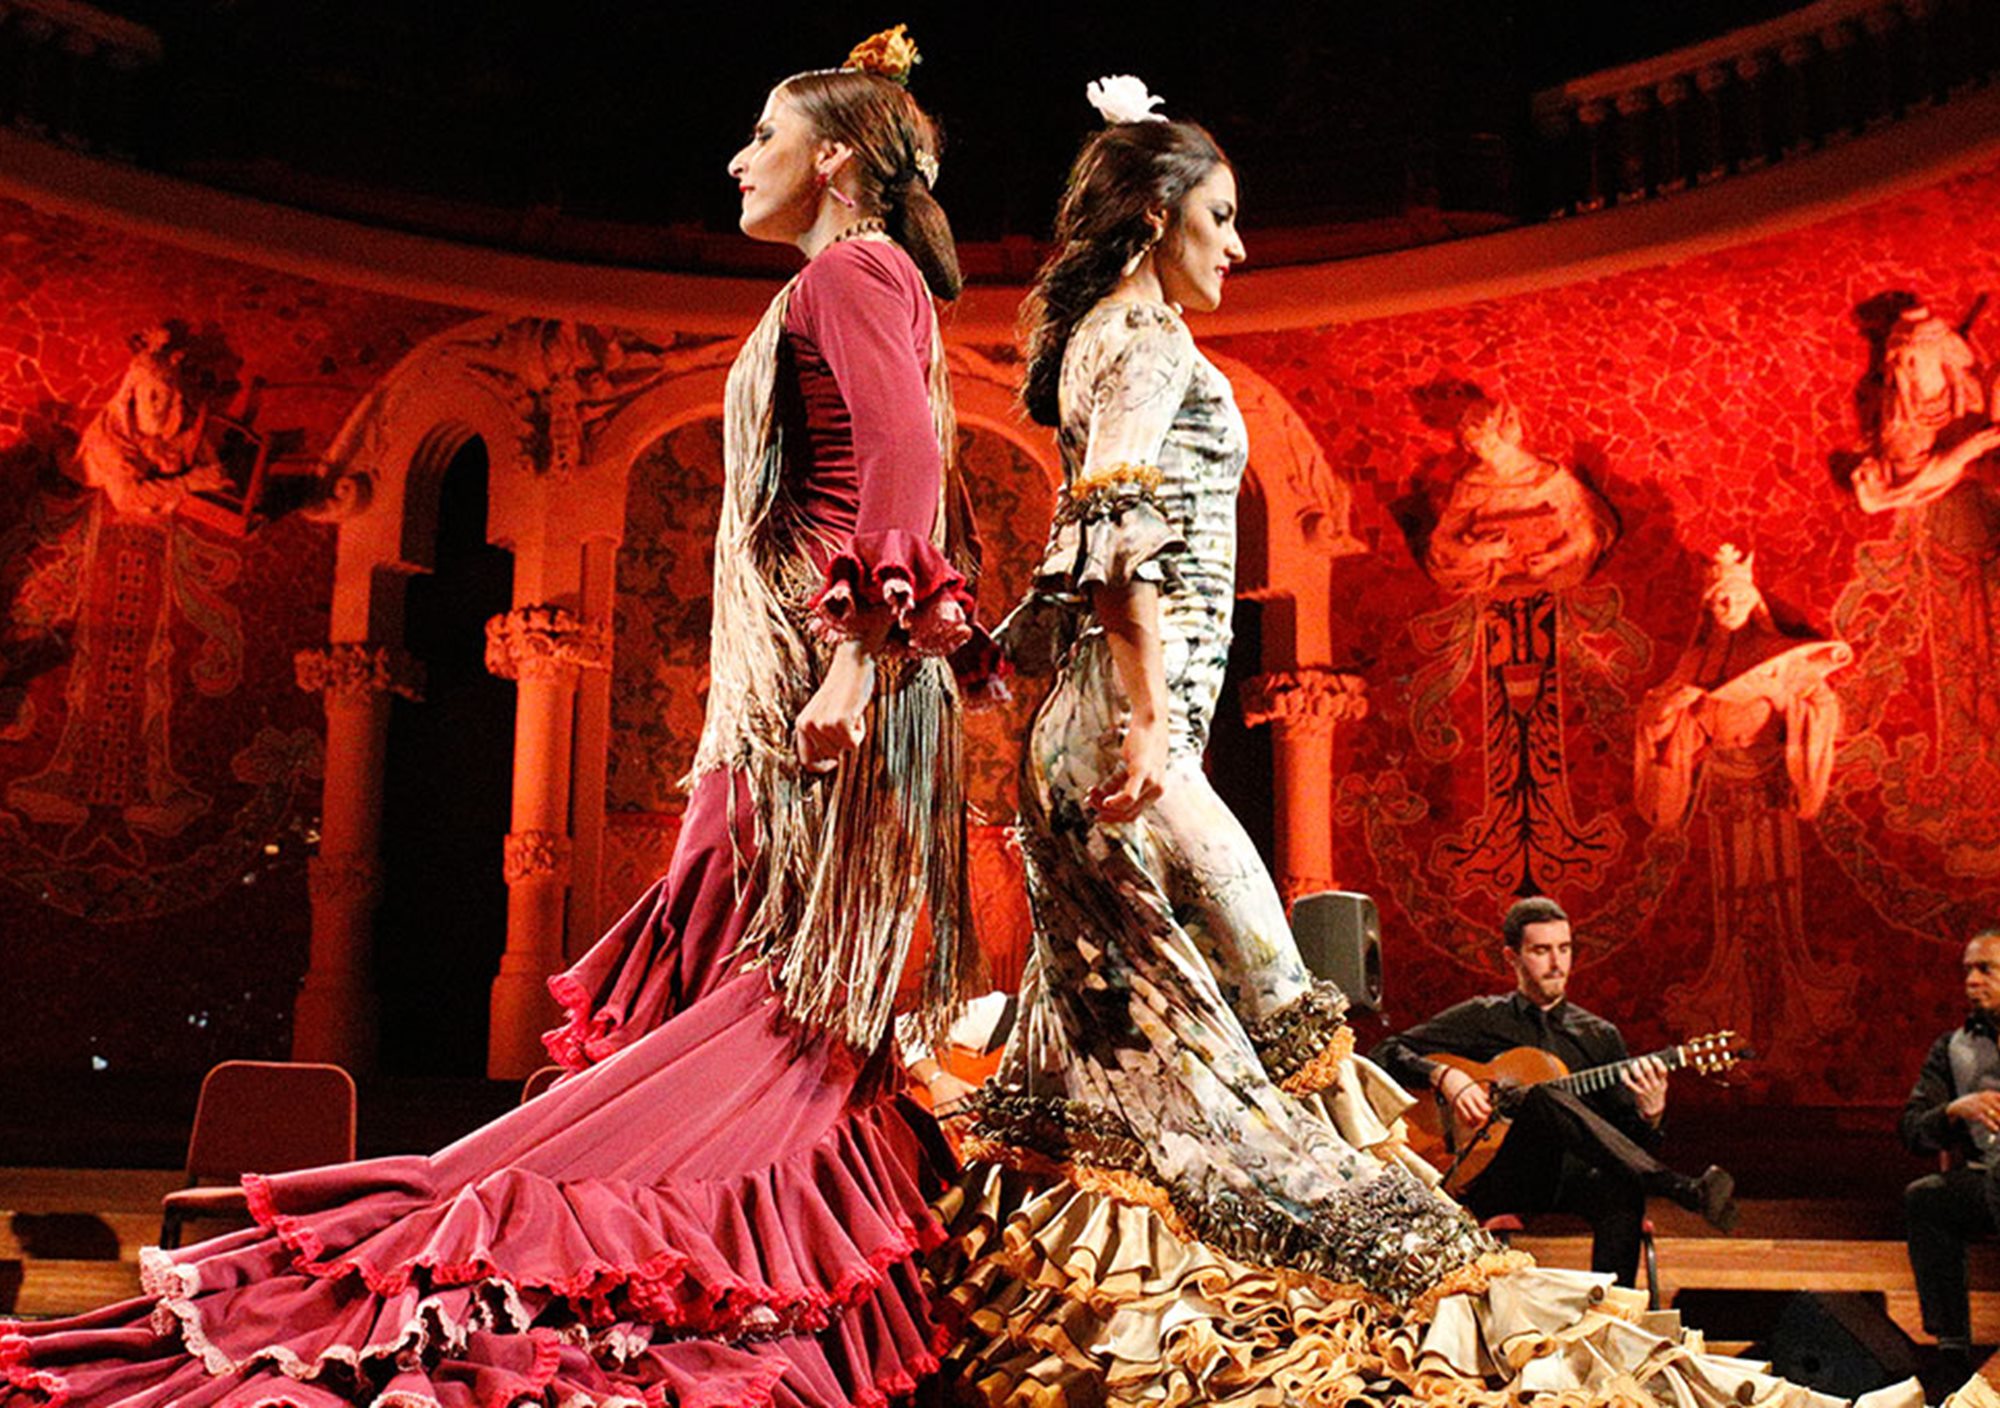 Show Gran Gala Flamenco in Teatre Poliorama buy online tickets reserve book